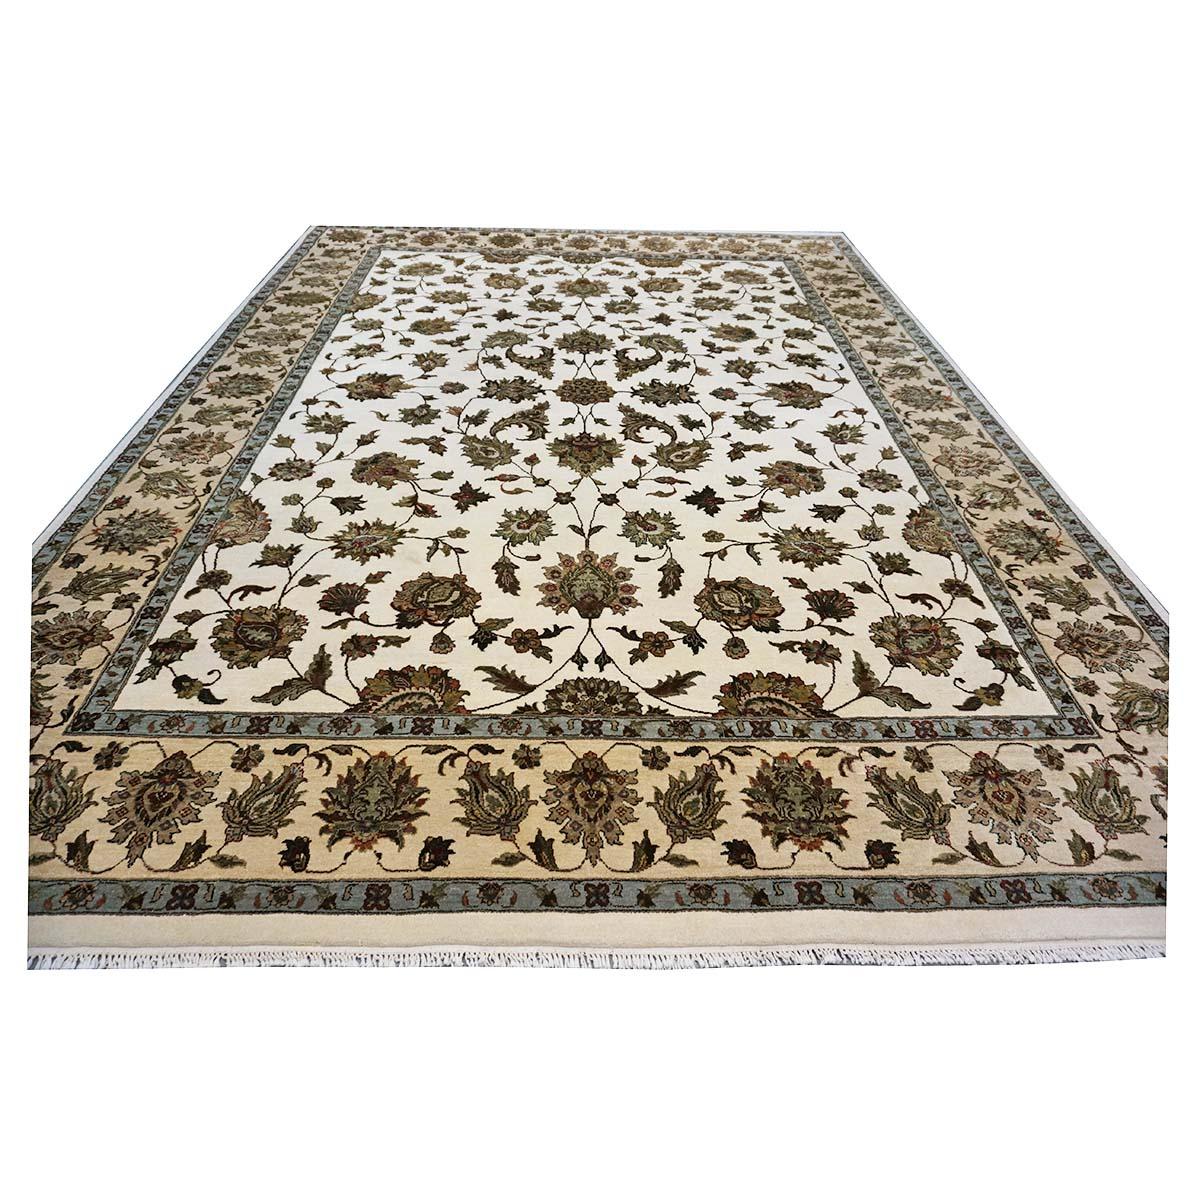 Hand-Woven Indian Tabriz Wool & Silk 9x12 White Ivory, Tan, Blue, & Green Handmade Area Rug For Sale